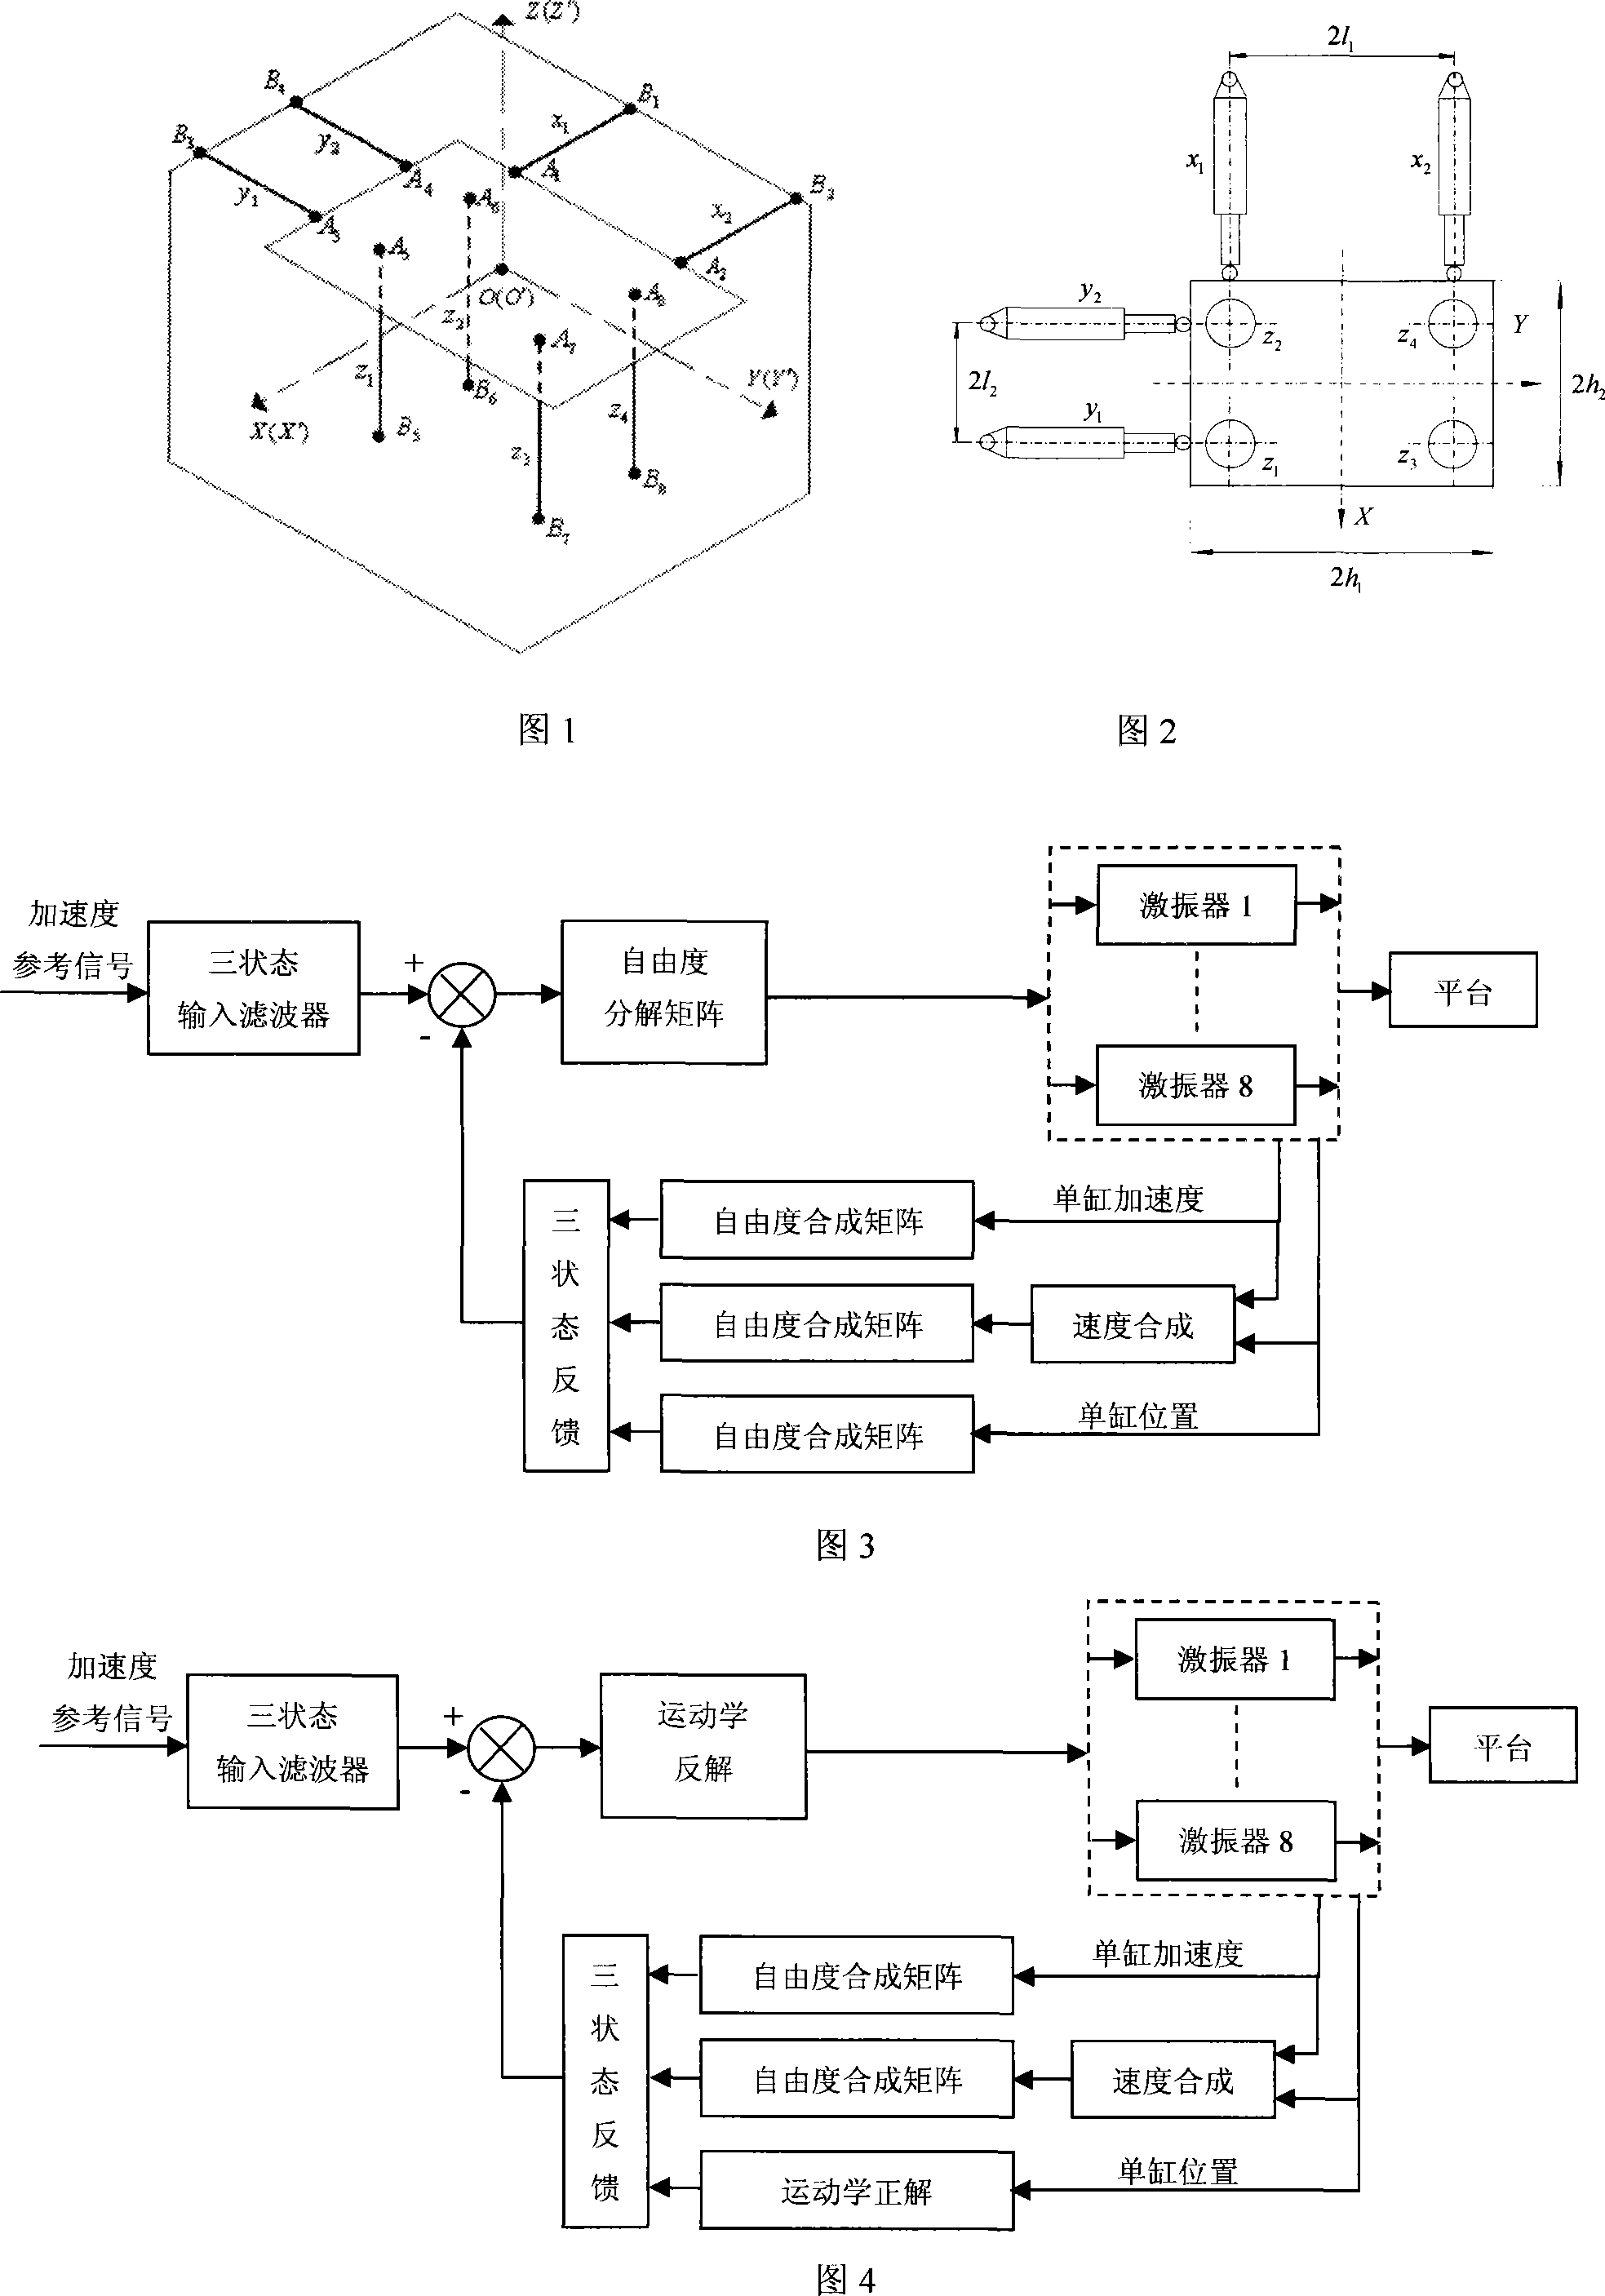 Control method for three-axis six-freedom hydraulic vibration table based on kinematics